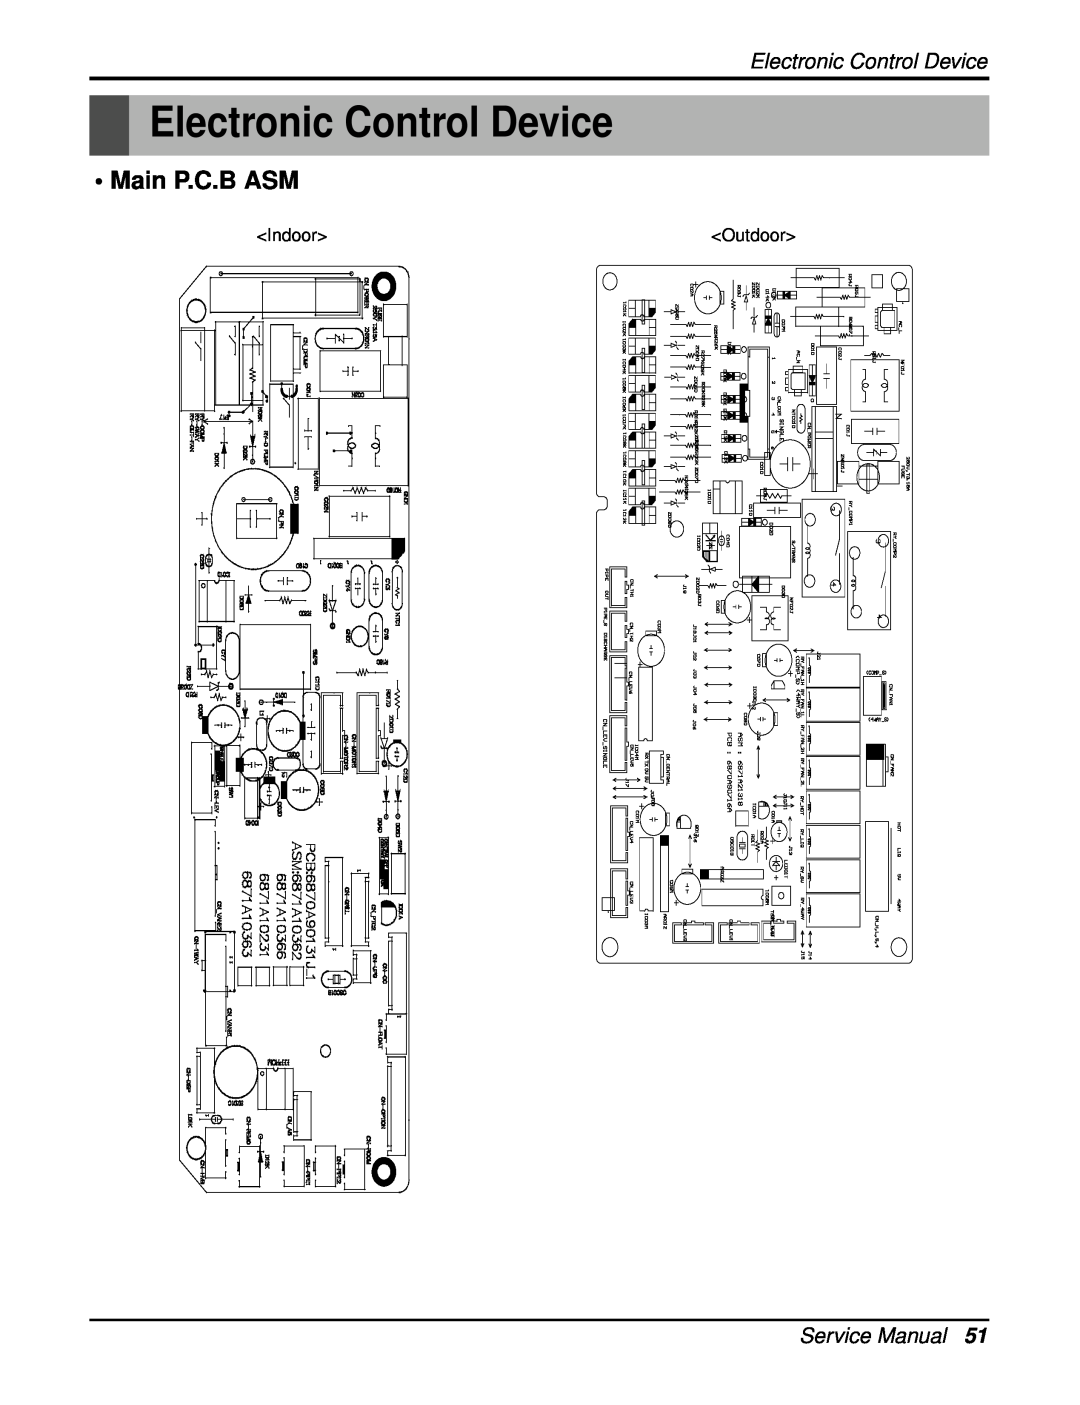 Heat Controller DMC36CA-1, DMC24CA-1 manual Electronic Control Device, Main P.C.B ASM 